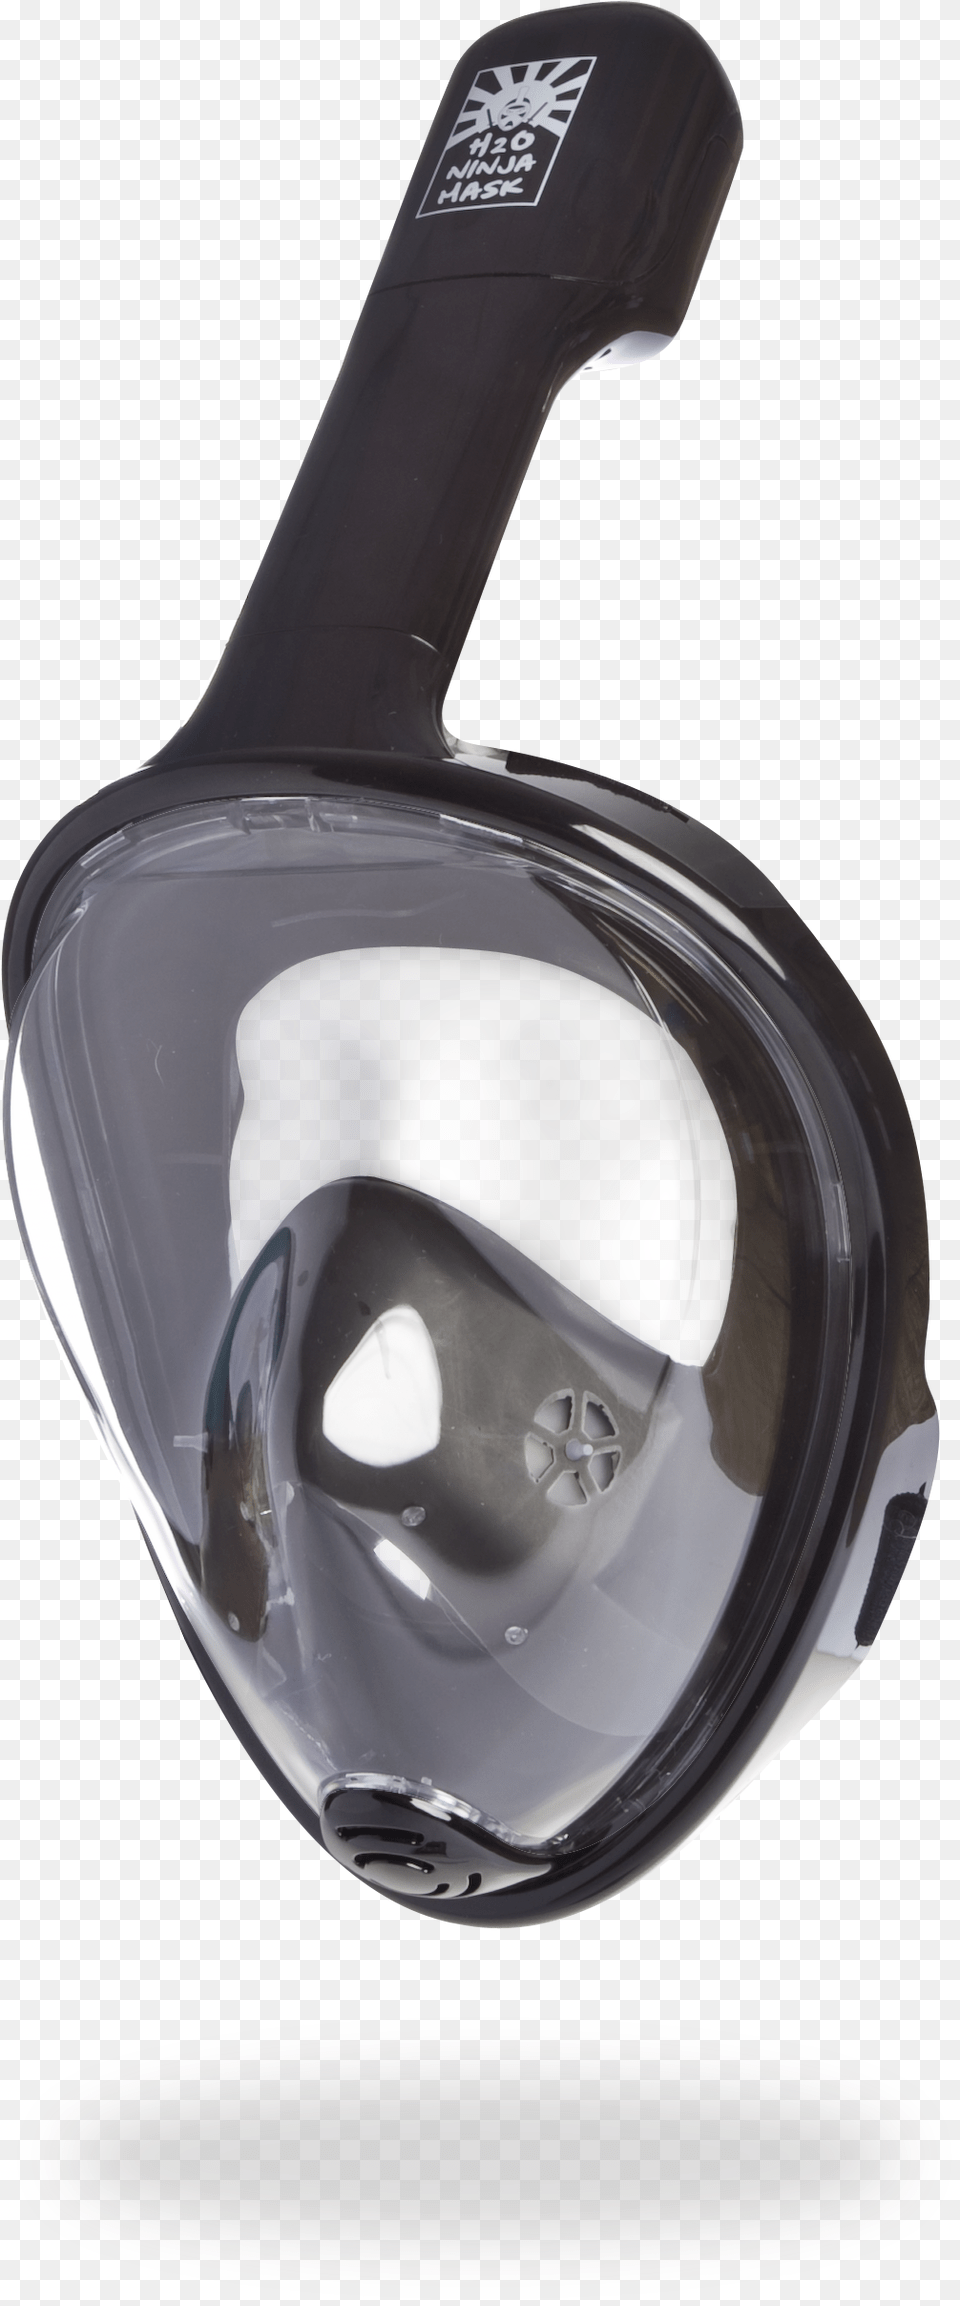 Ninja Mask Full Face Snorkeling Mask H2o Ninja Mask, Lighting, Cooking Pan, Cookware, Smoke Pipe Png Image